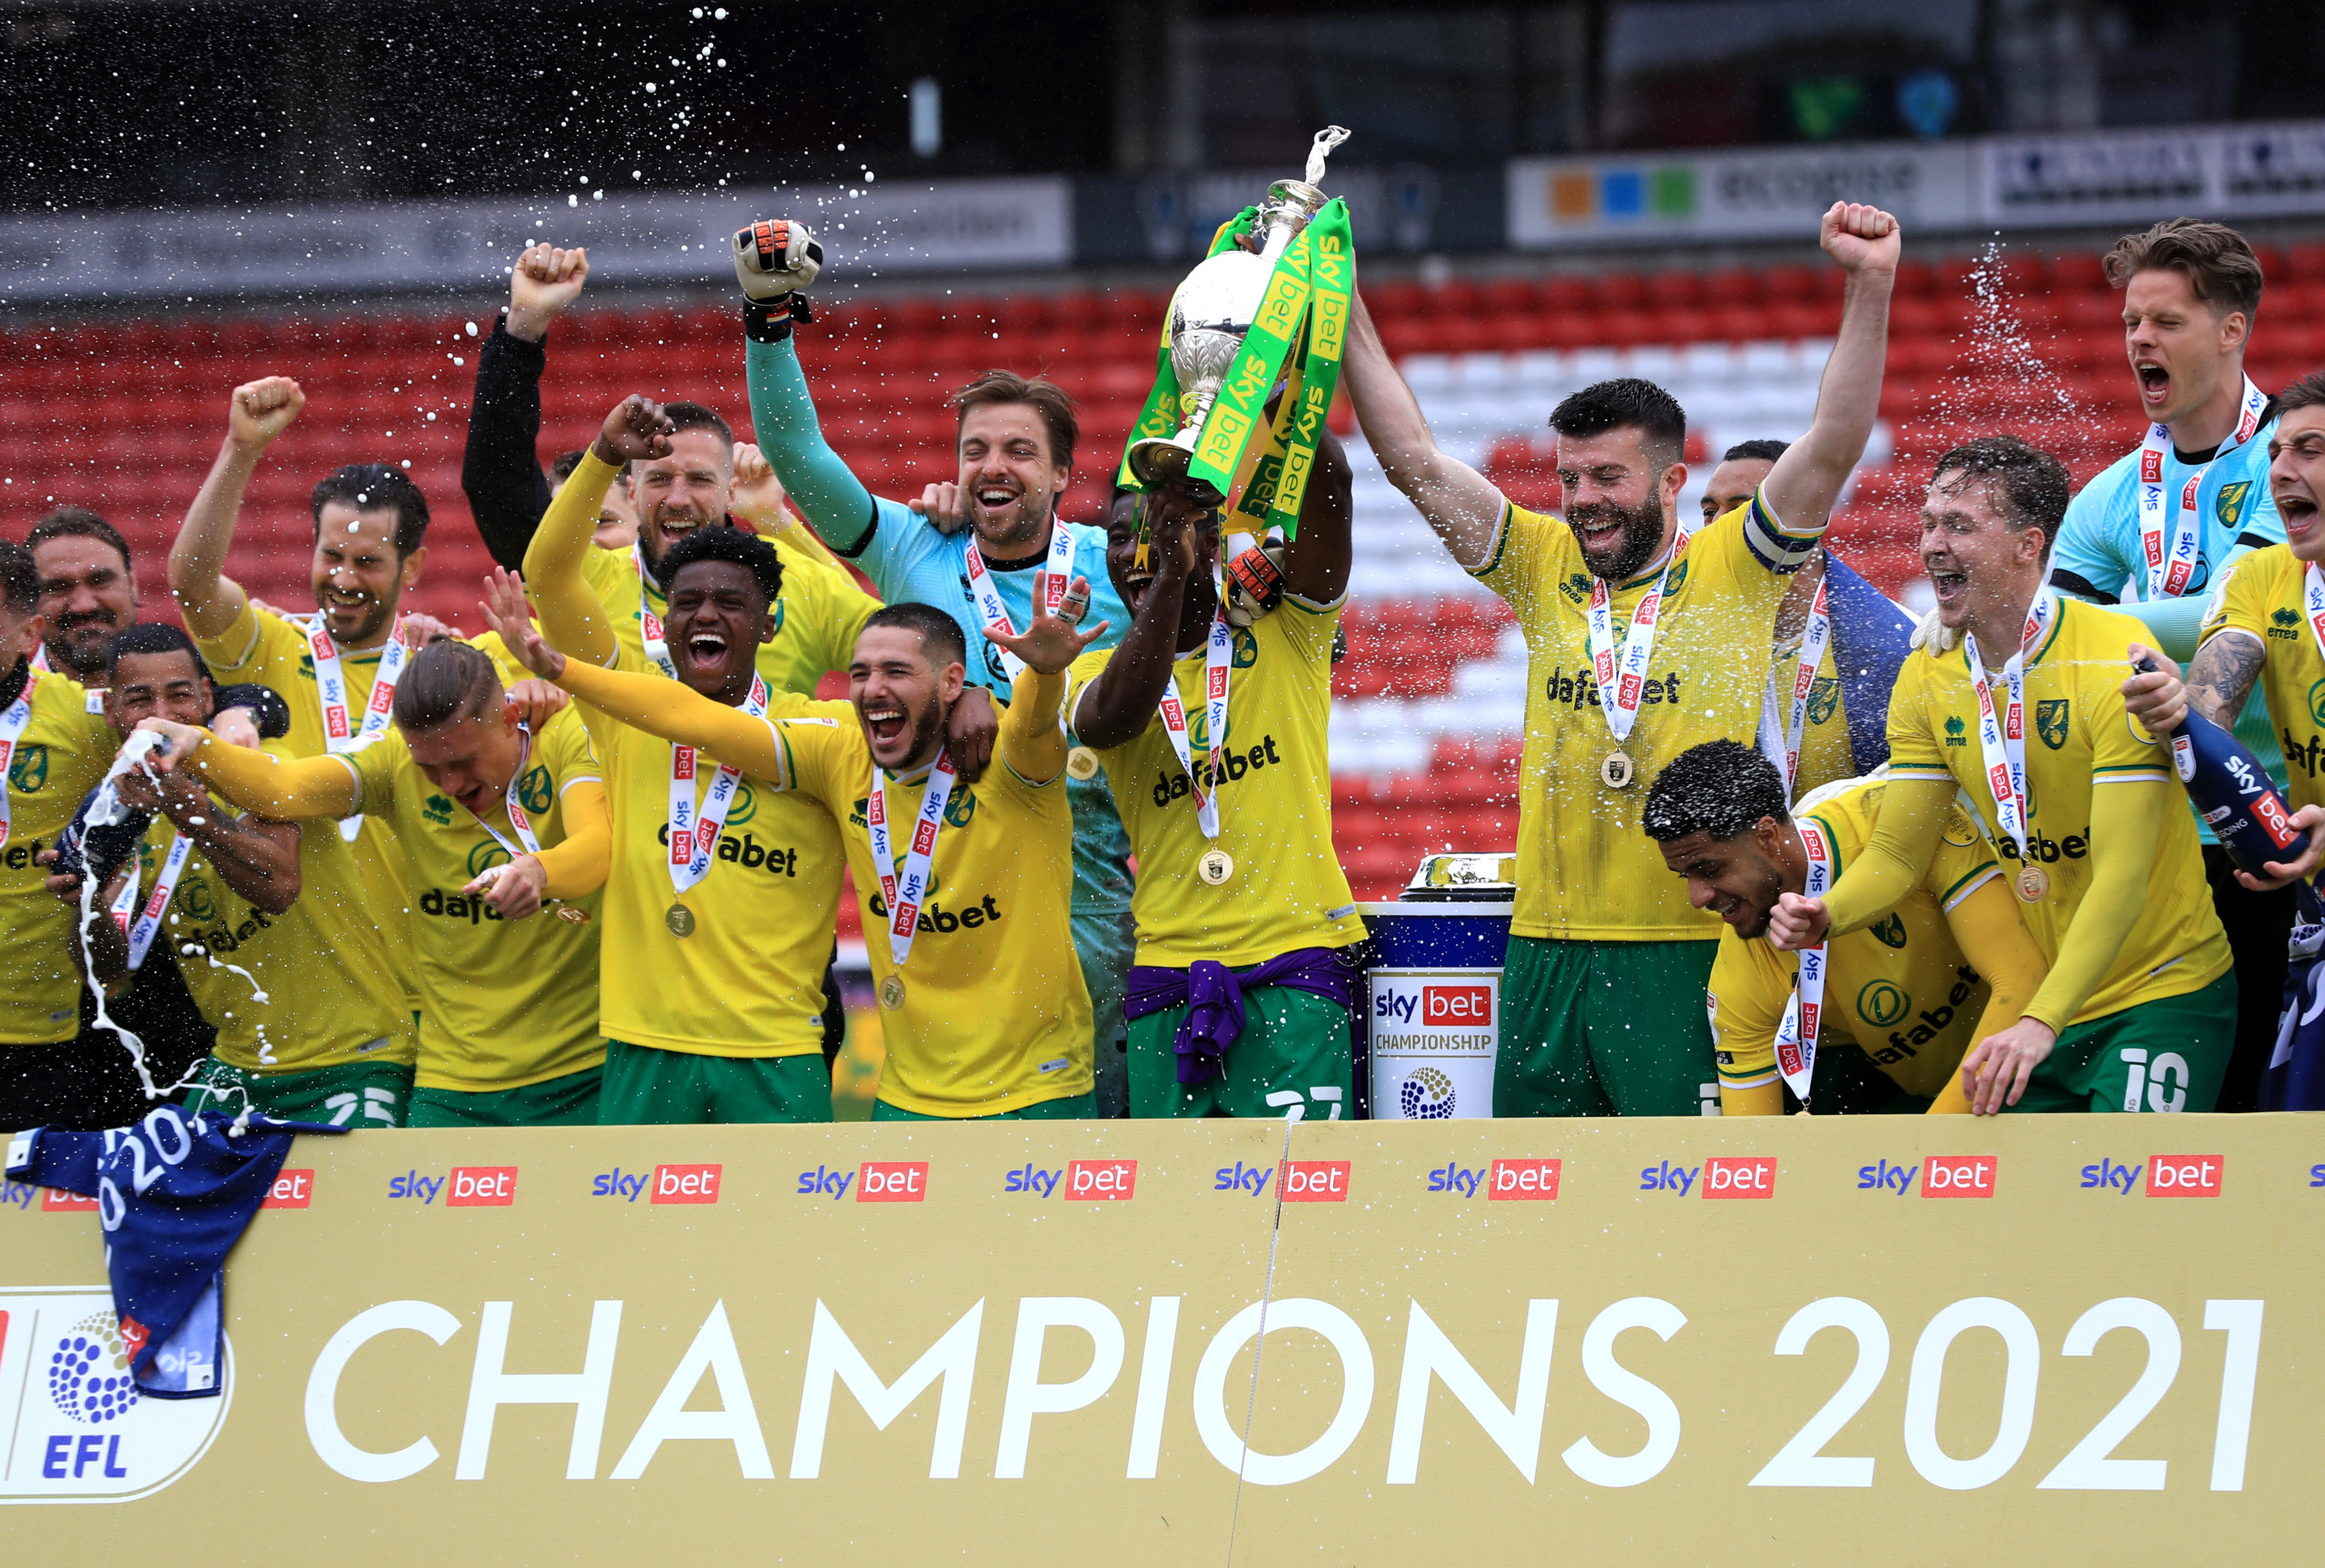 Norwich City: Championship Champions in 2020/21